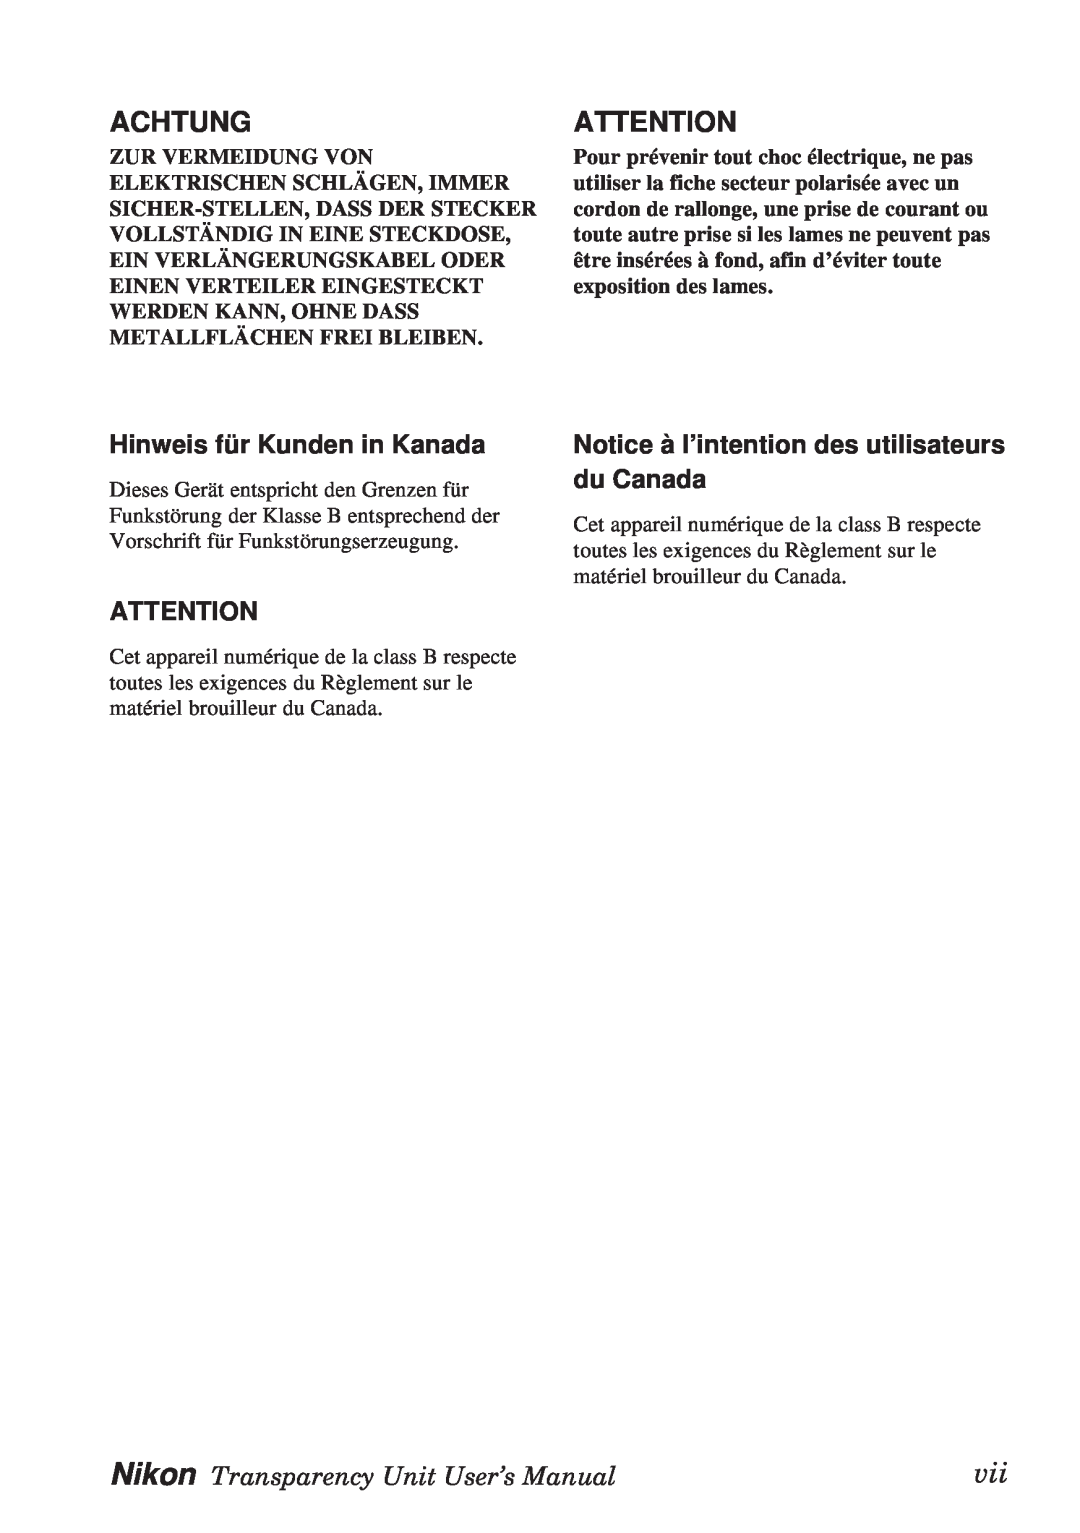 Nikon Transparency Unit manual Achtung, Hinweis für Kunden in Kanada, Notice à l’intention des utilisateurs du Canada 